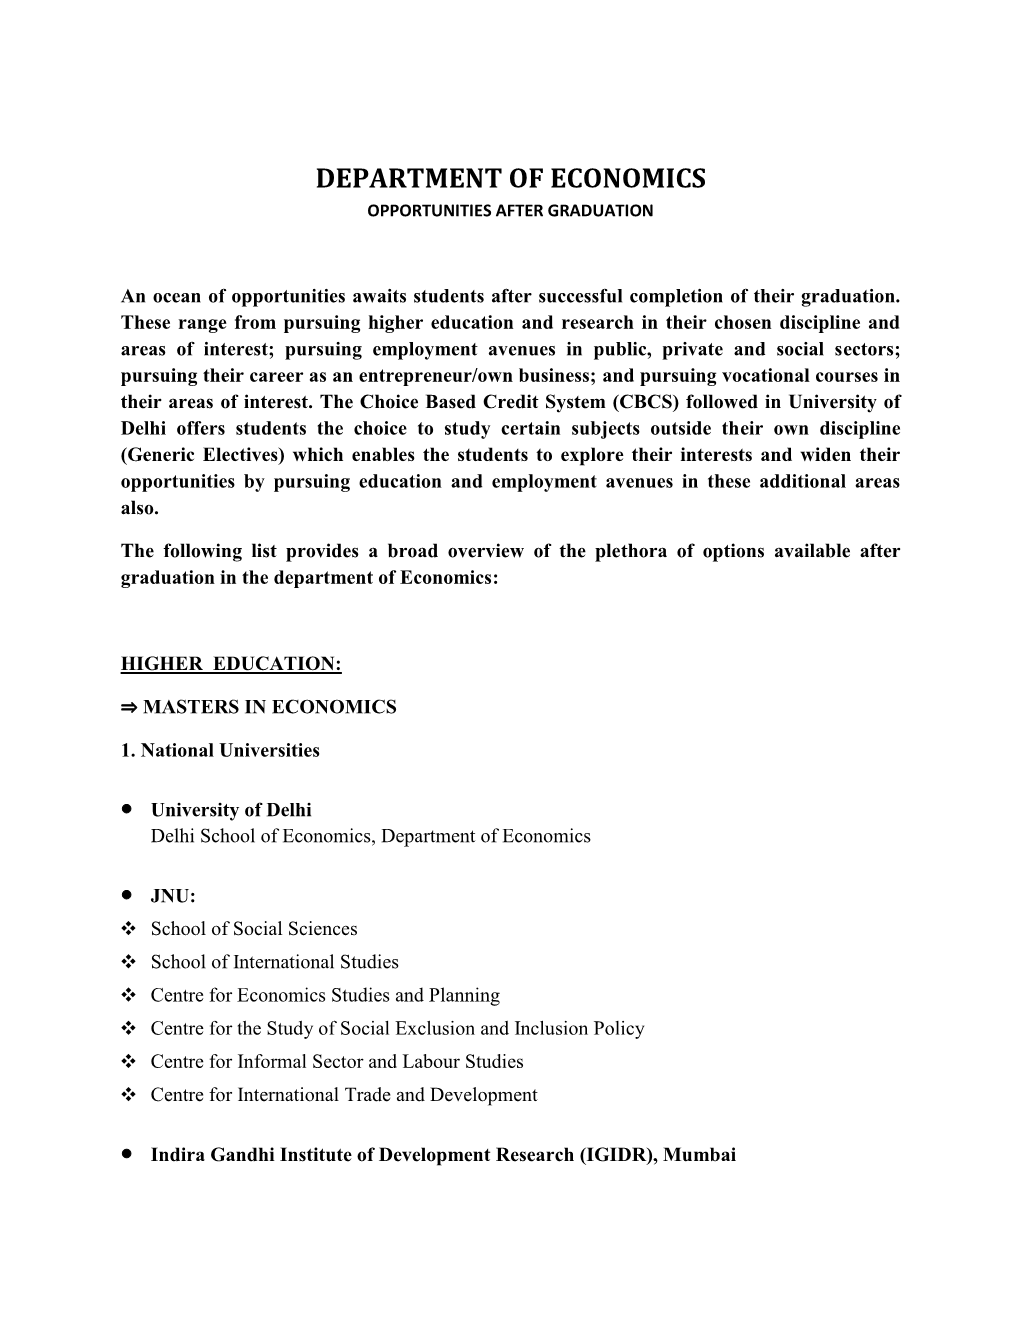 Department of Economics Opportunities After Graduation